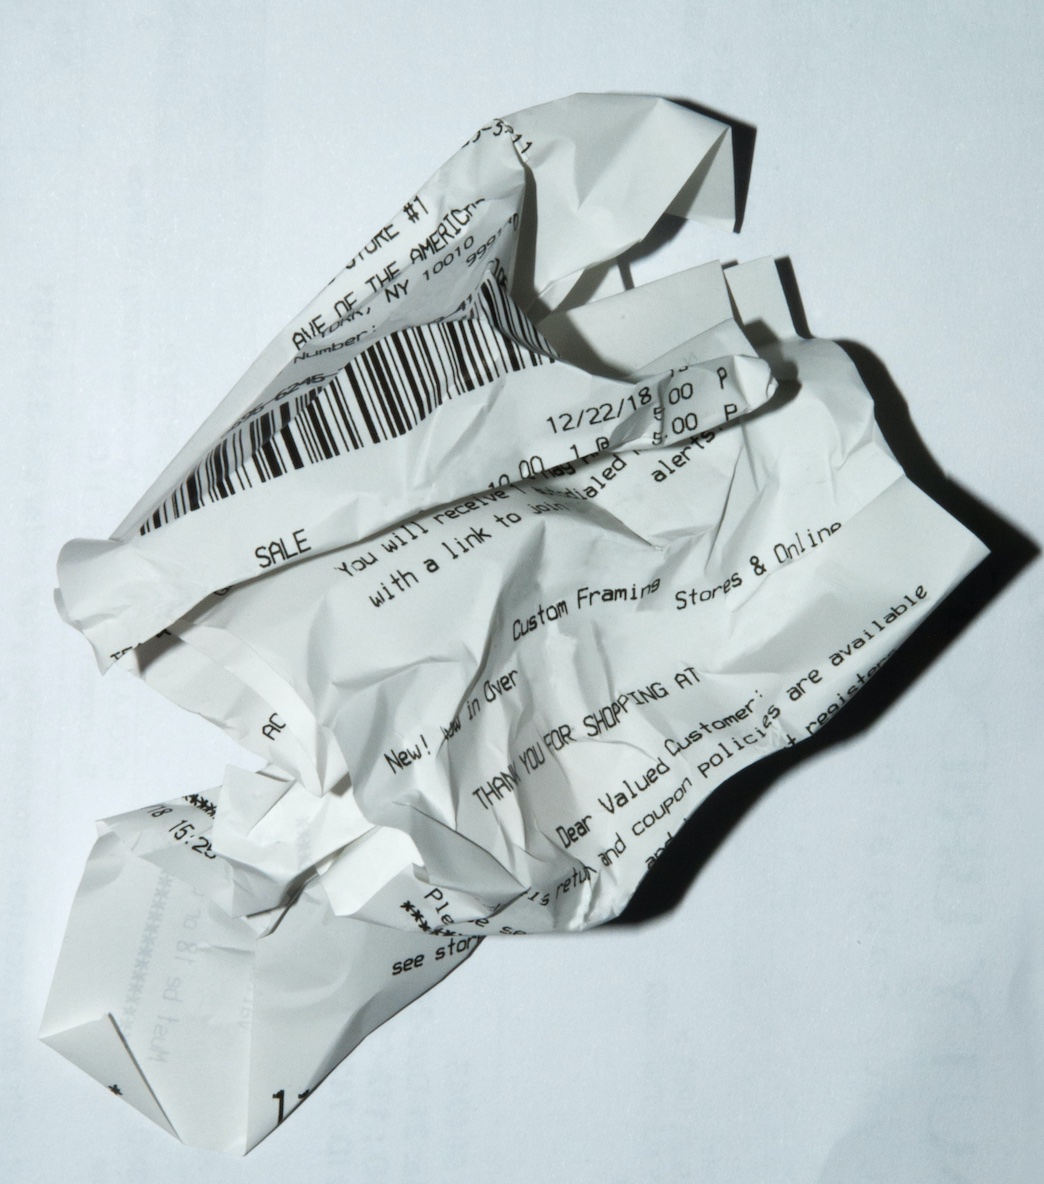 Crumpled up receipt; image by Michael Walter, via Unsplash.com.